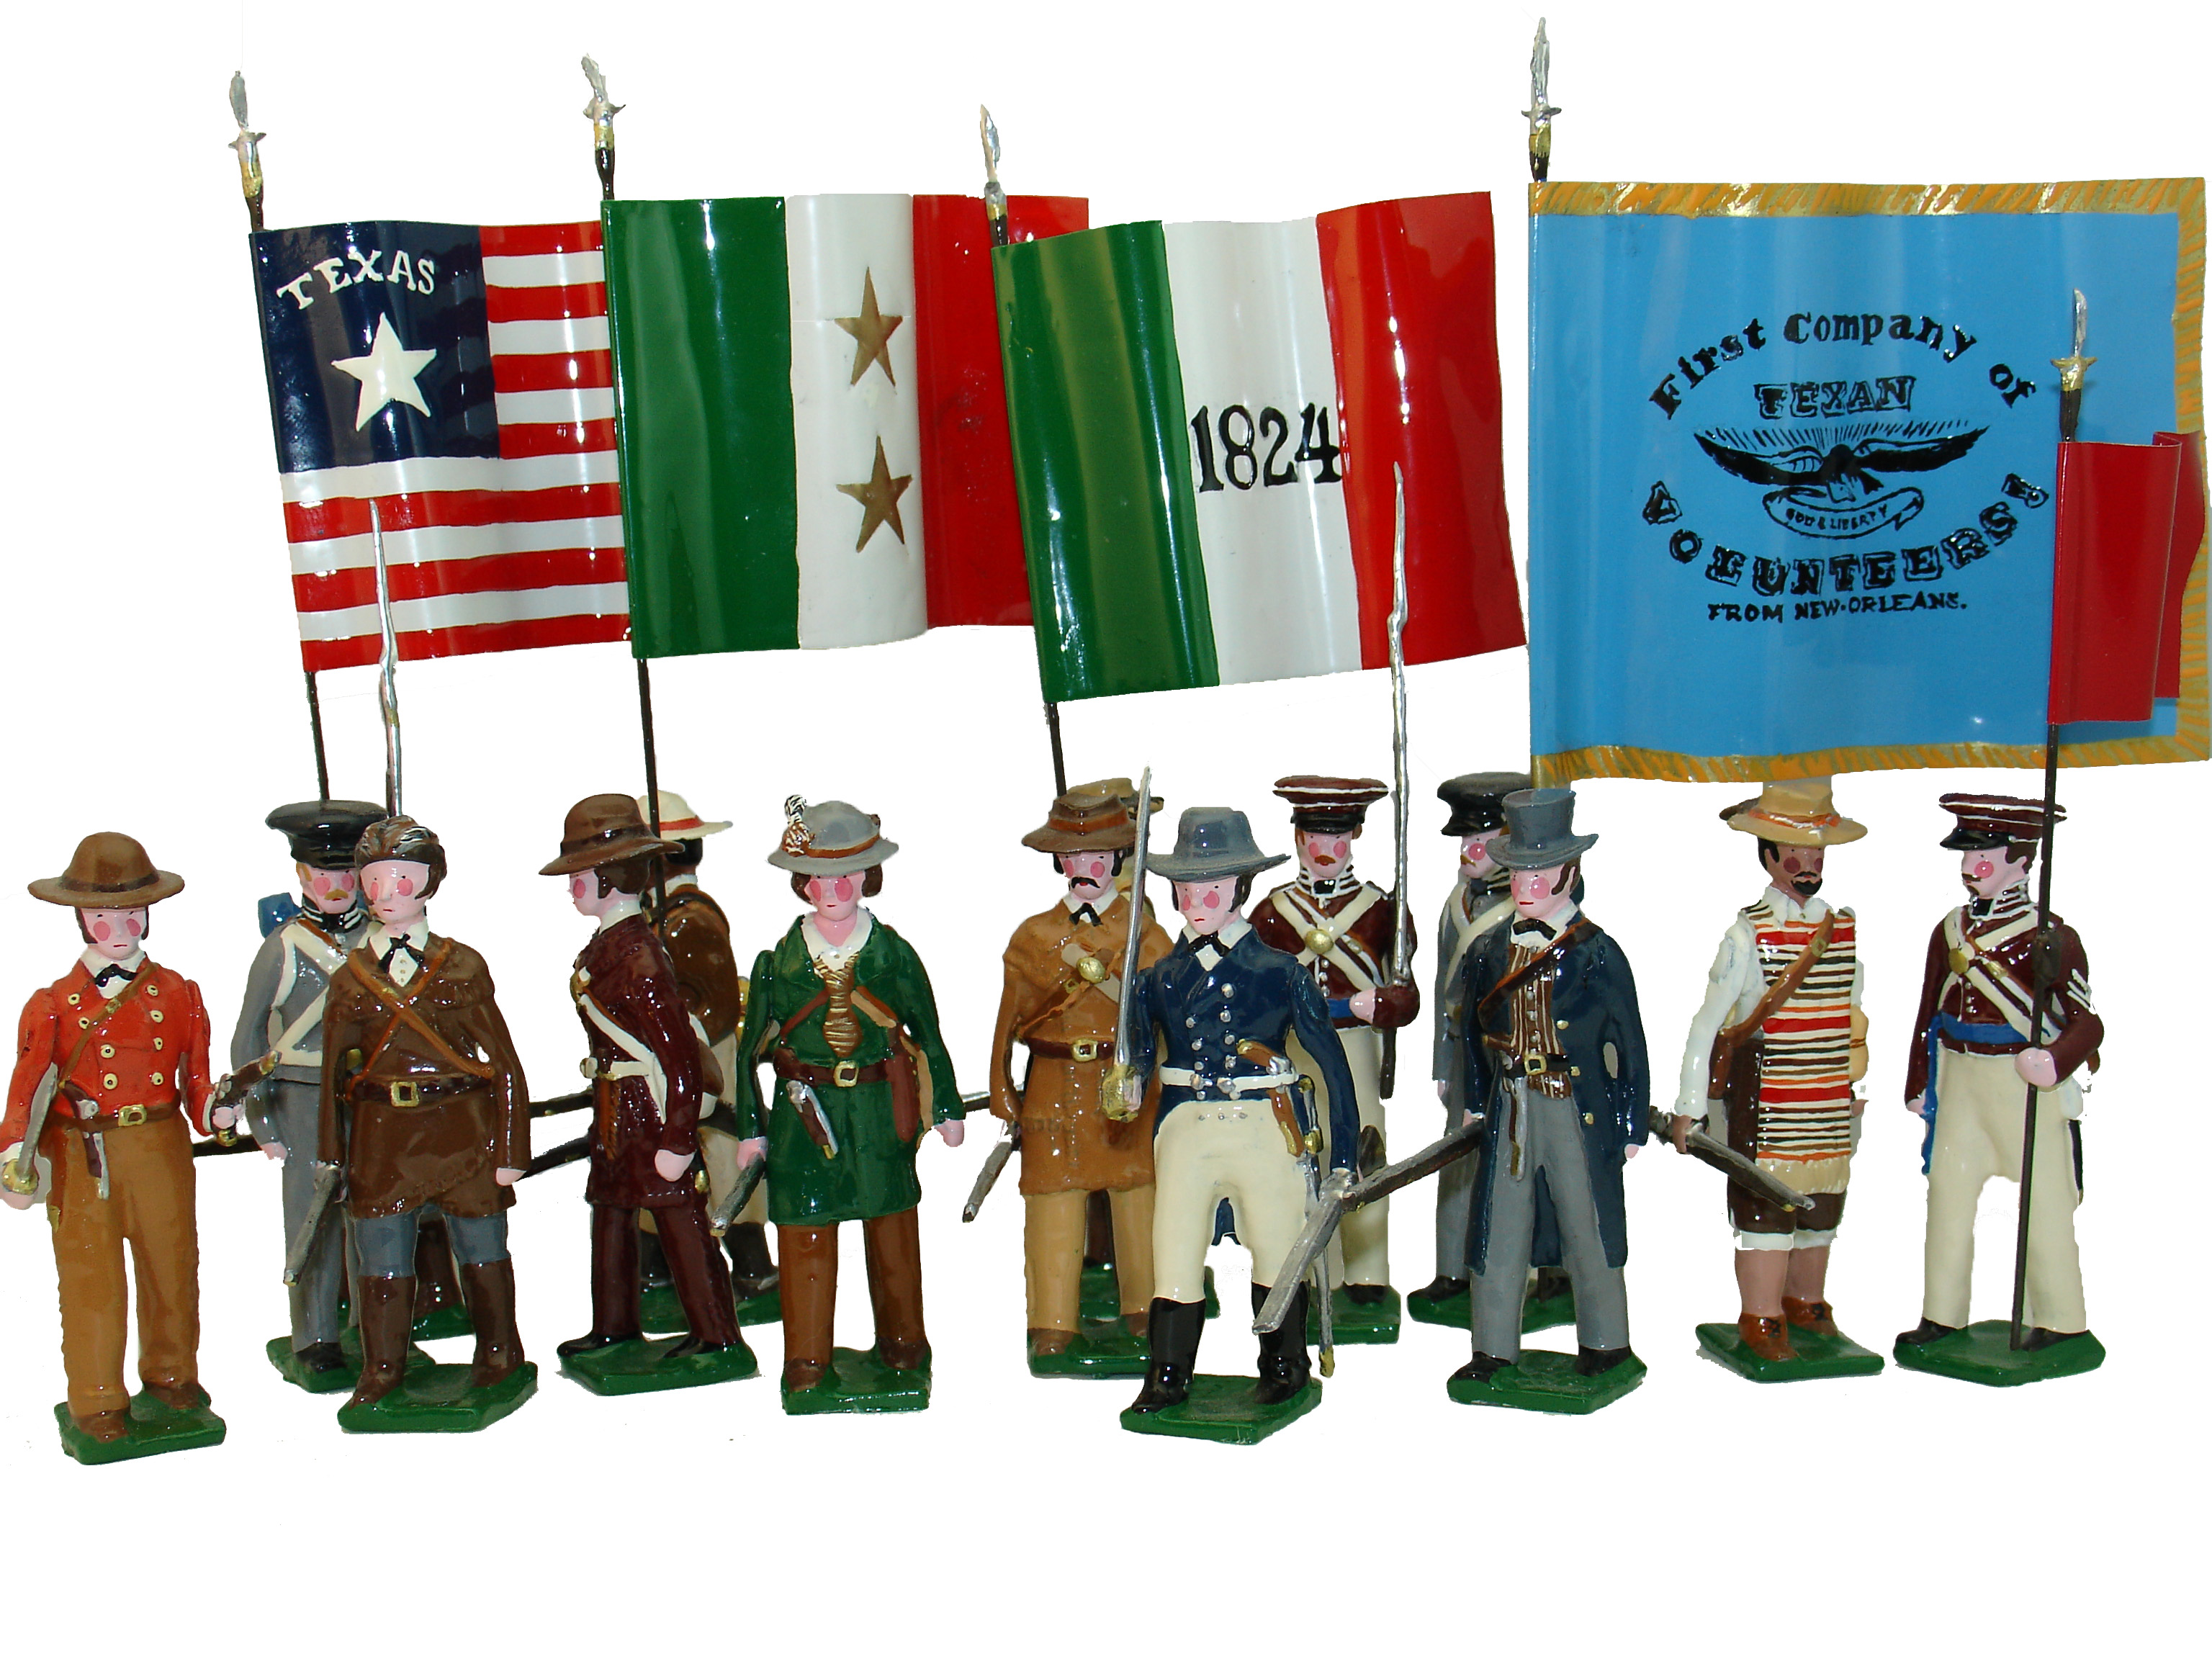 The Alamo, Texas Independence, 1835-1836